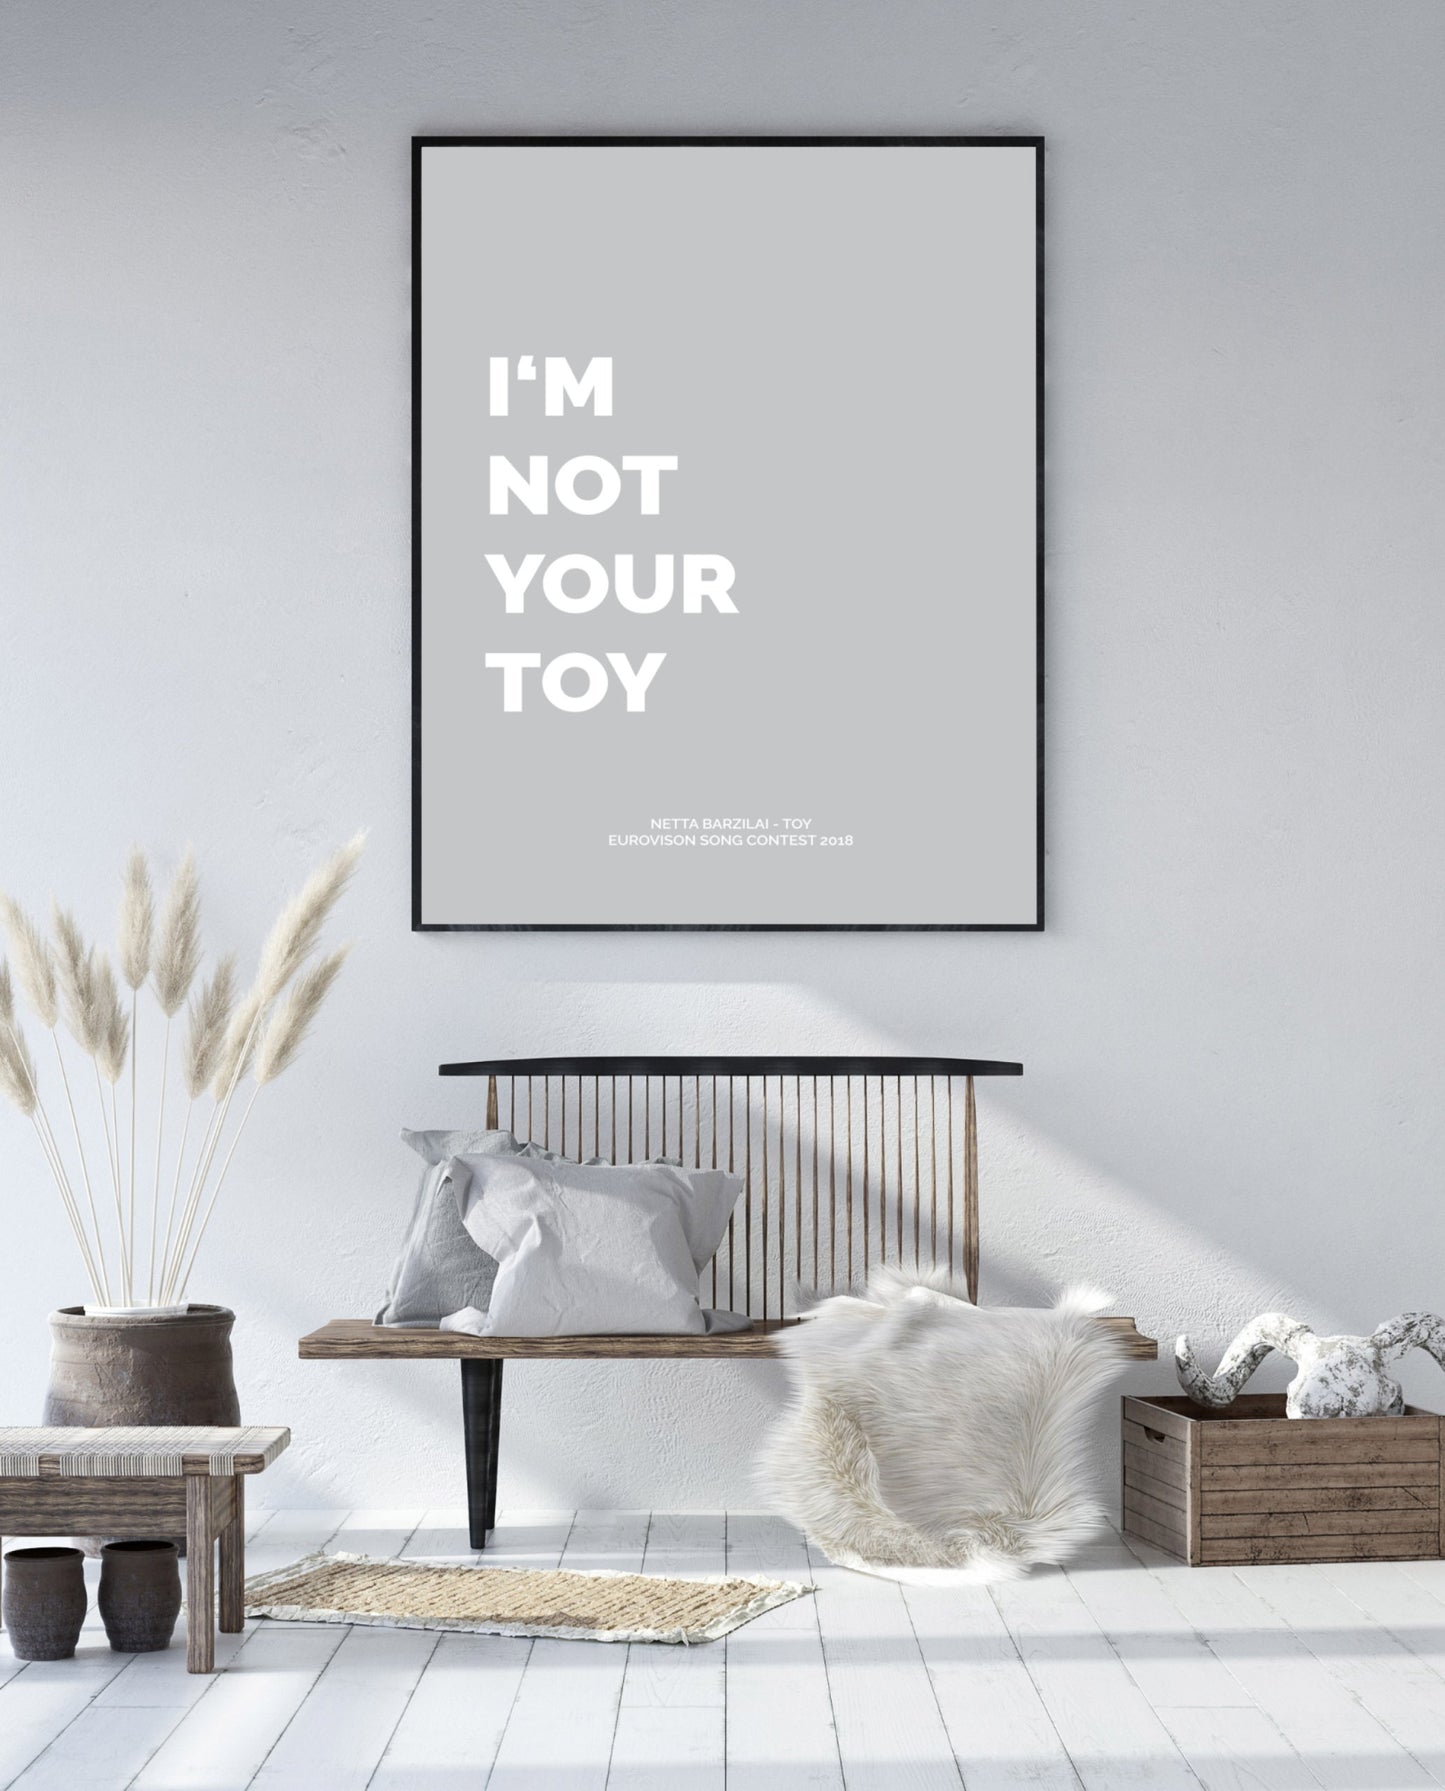 Poster Netta Barzilai - Toy (2018)